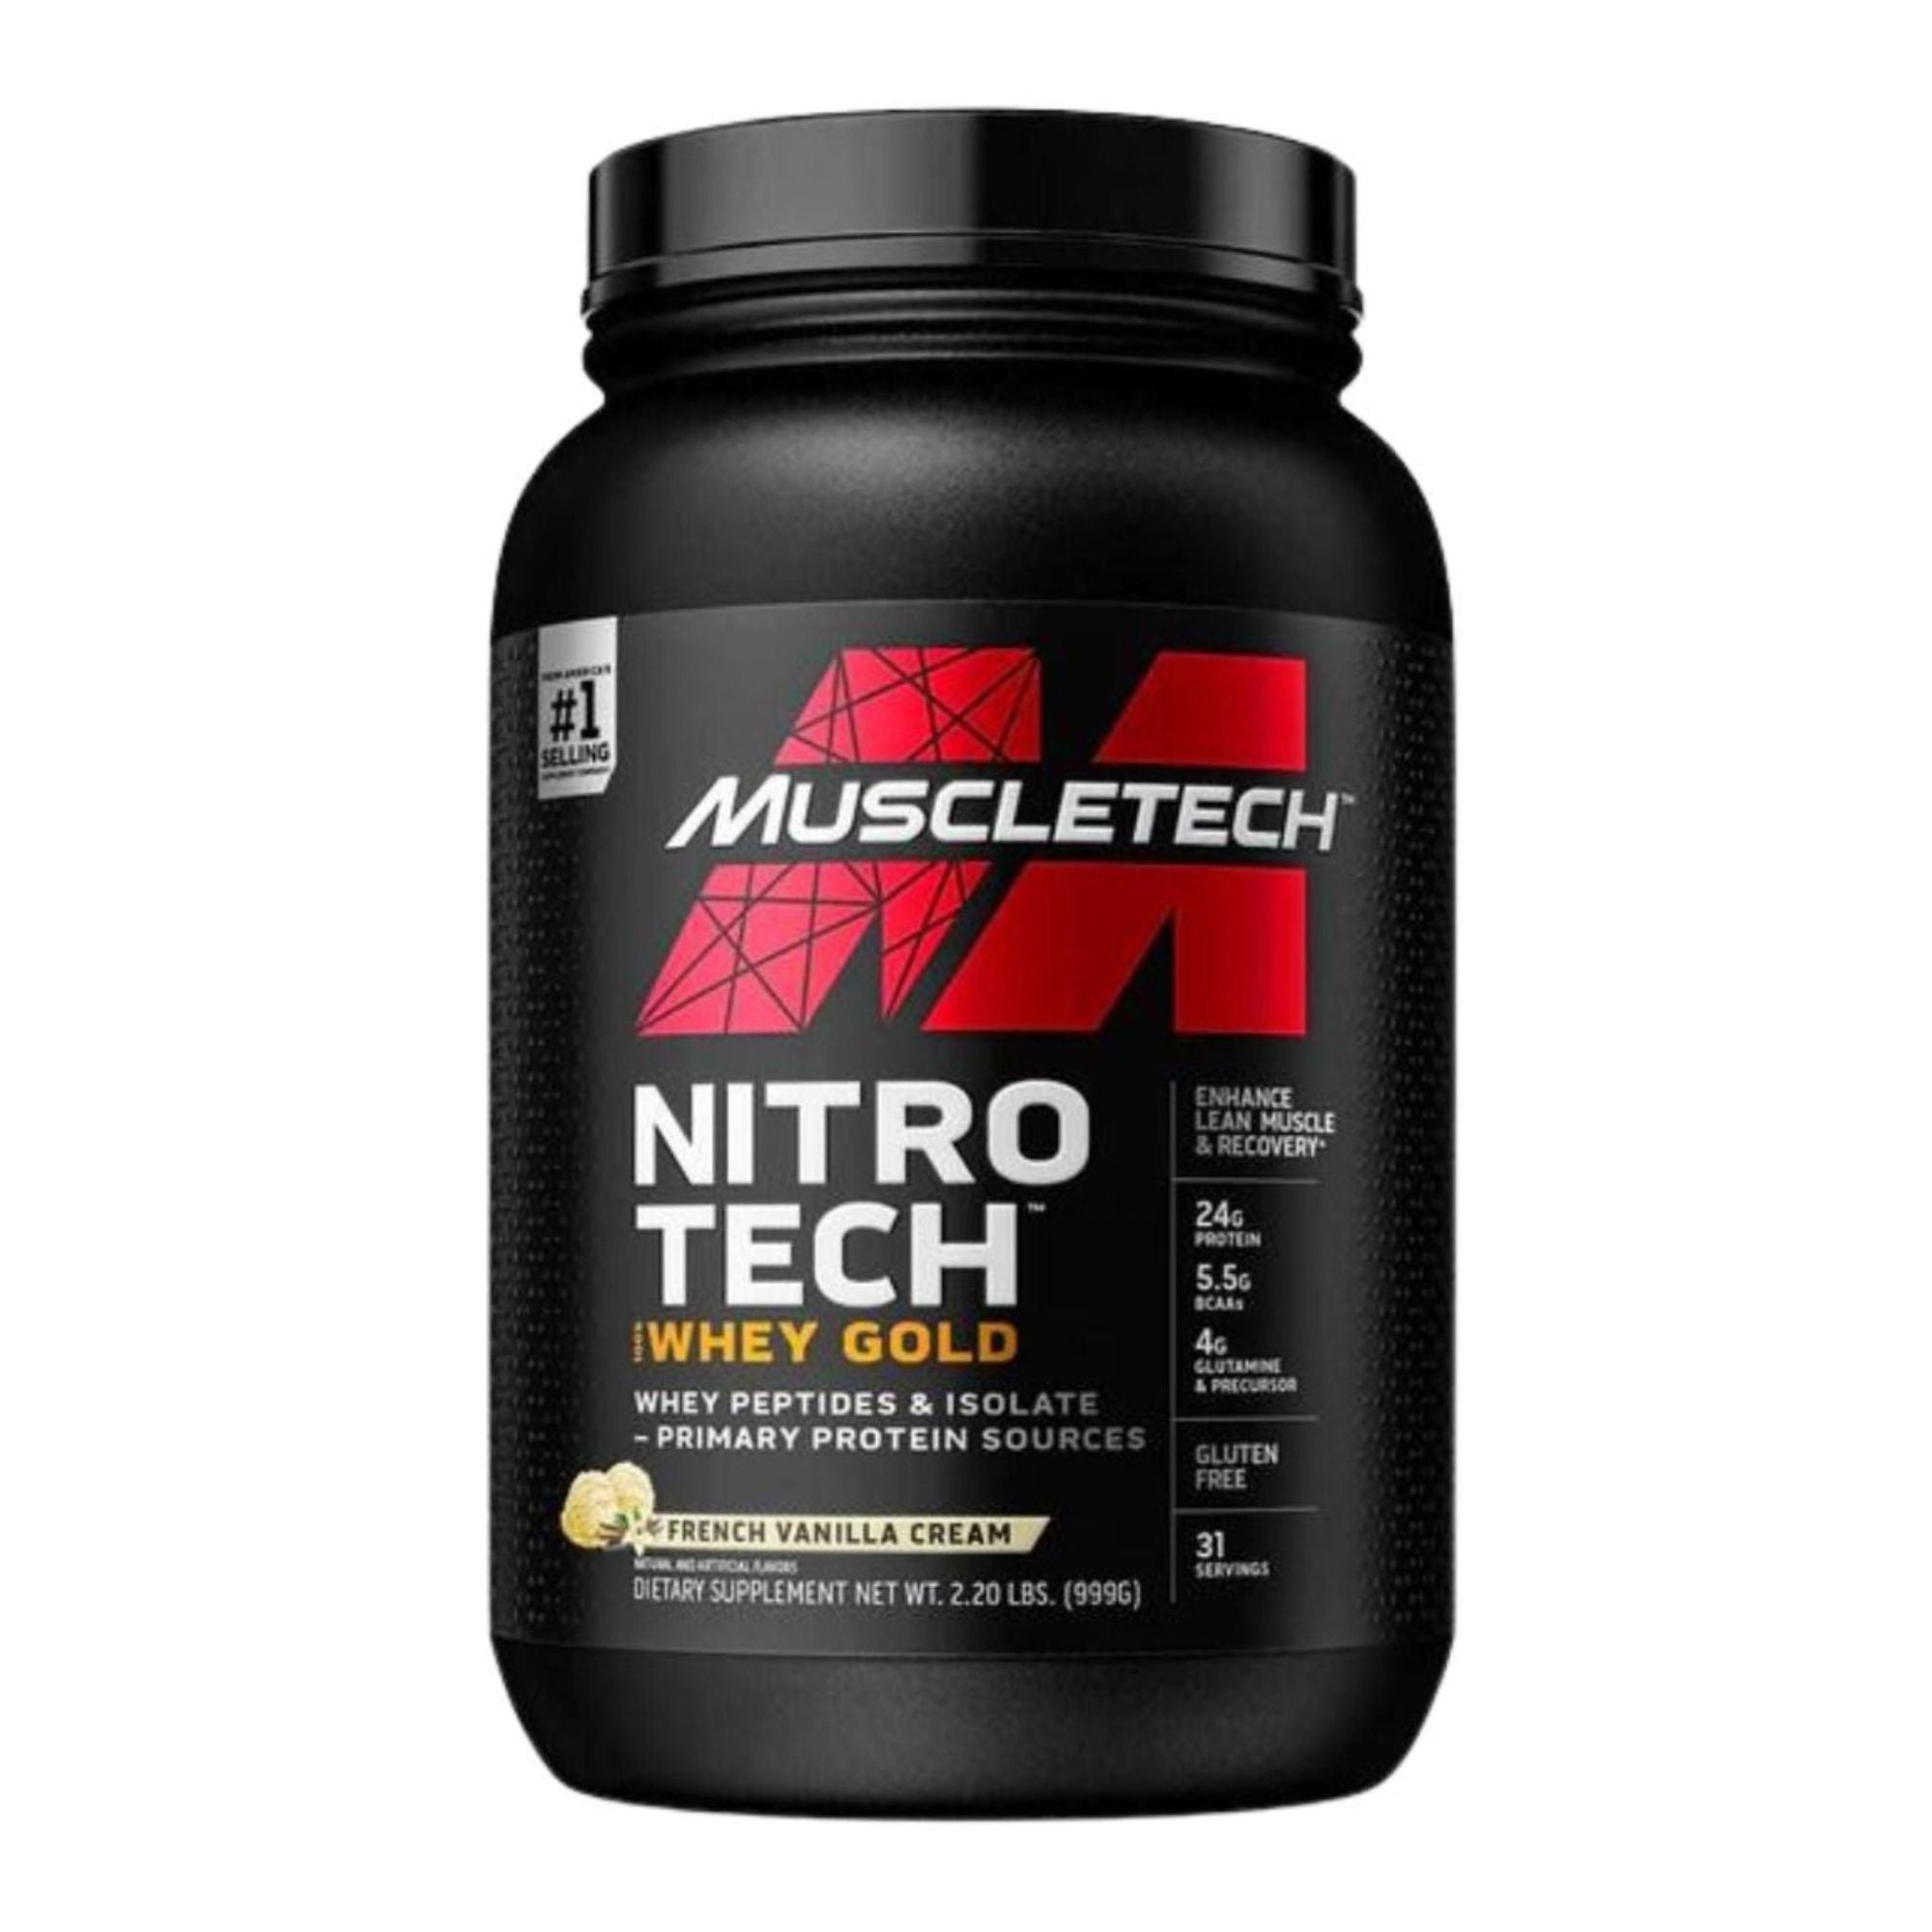 Muscletech Nitro Tech Whey Gold Protein Powder